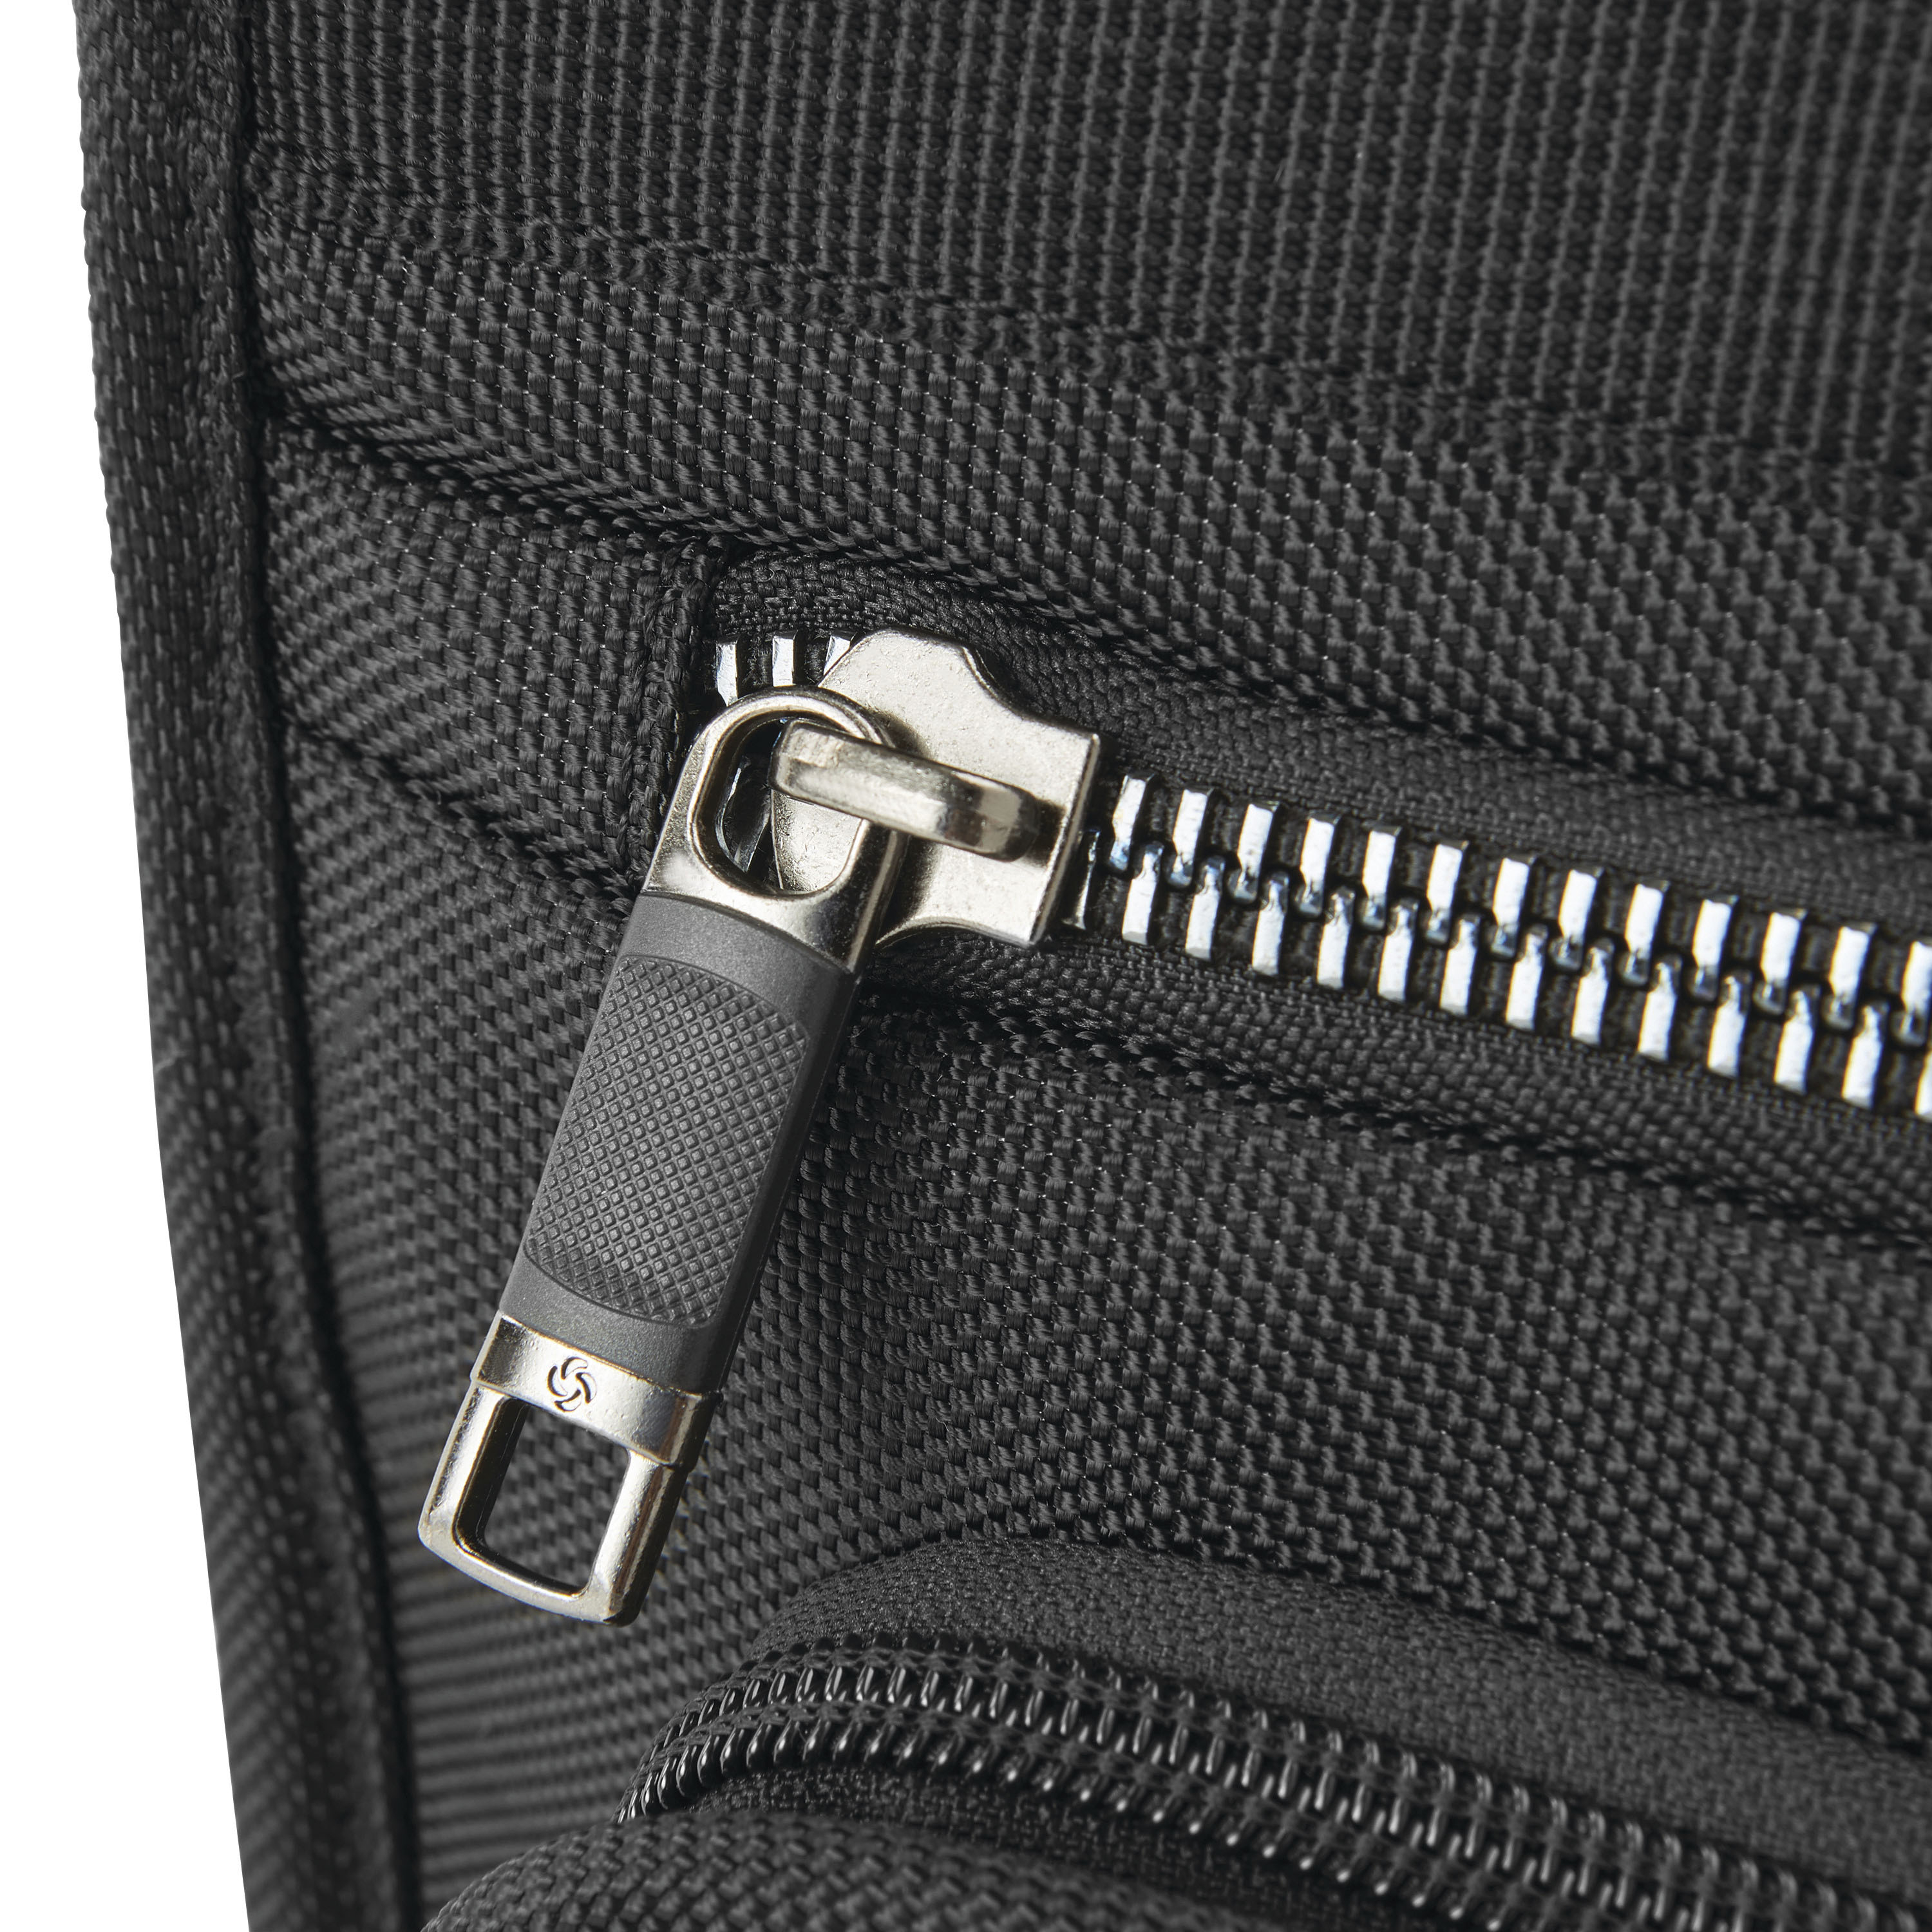 Samsonite SXK Rolltop Laptop Backpack with RFID Black/Silver